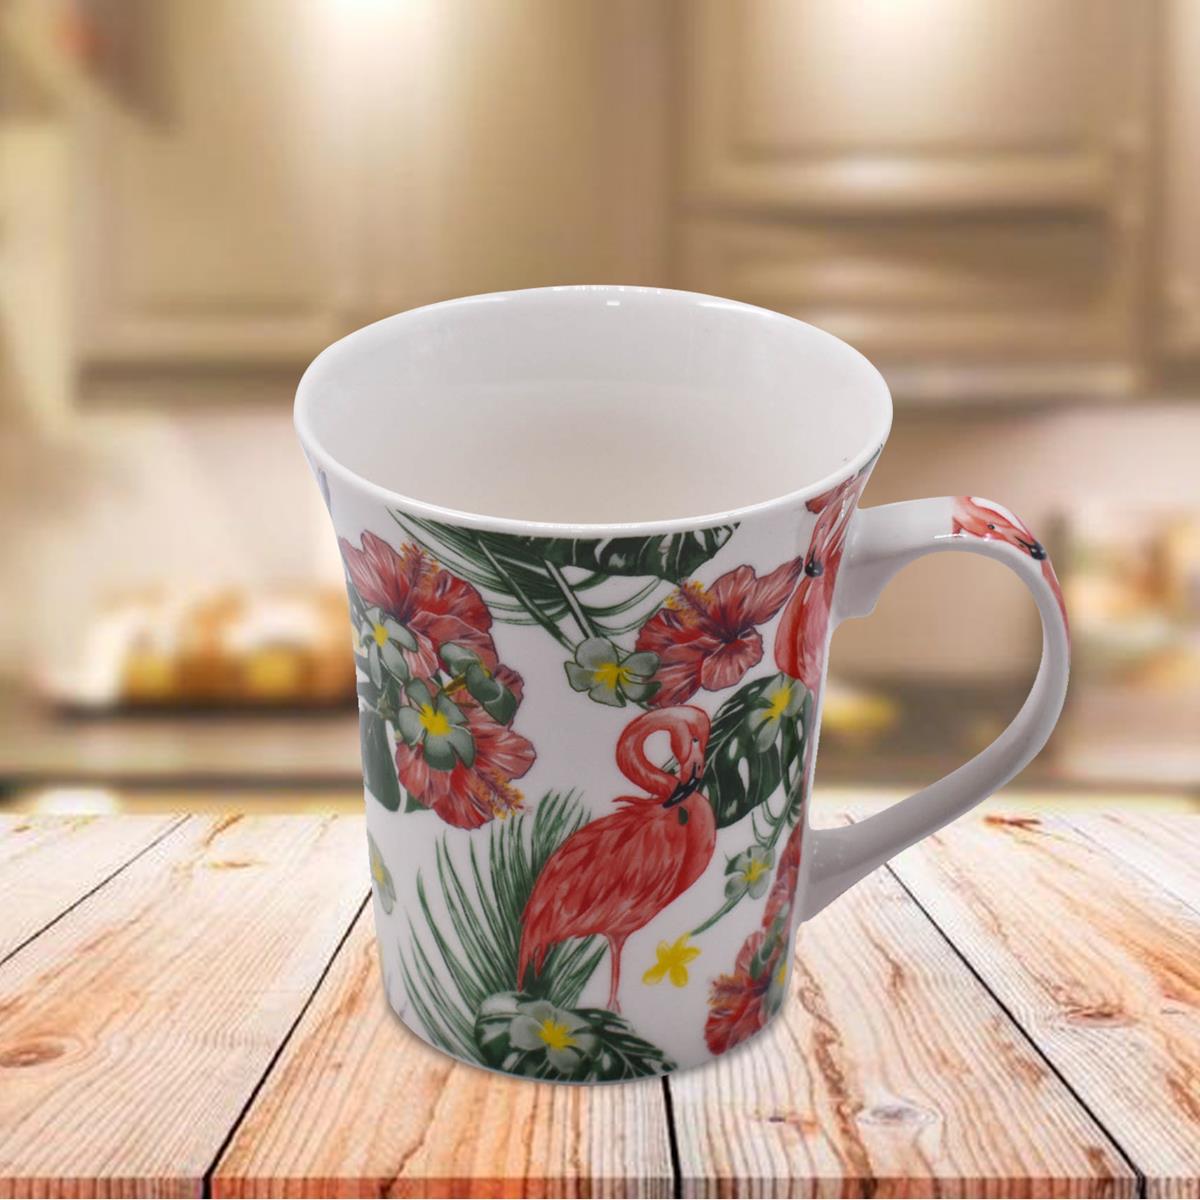 Printed Ceramic Tall Coffee or Tea Mug with handle - 325ml (BPM4051-C)